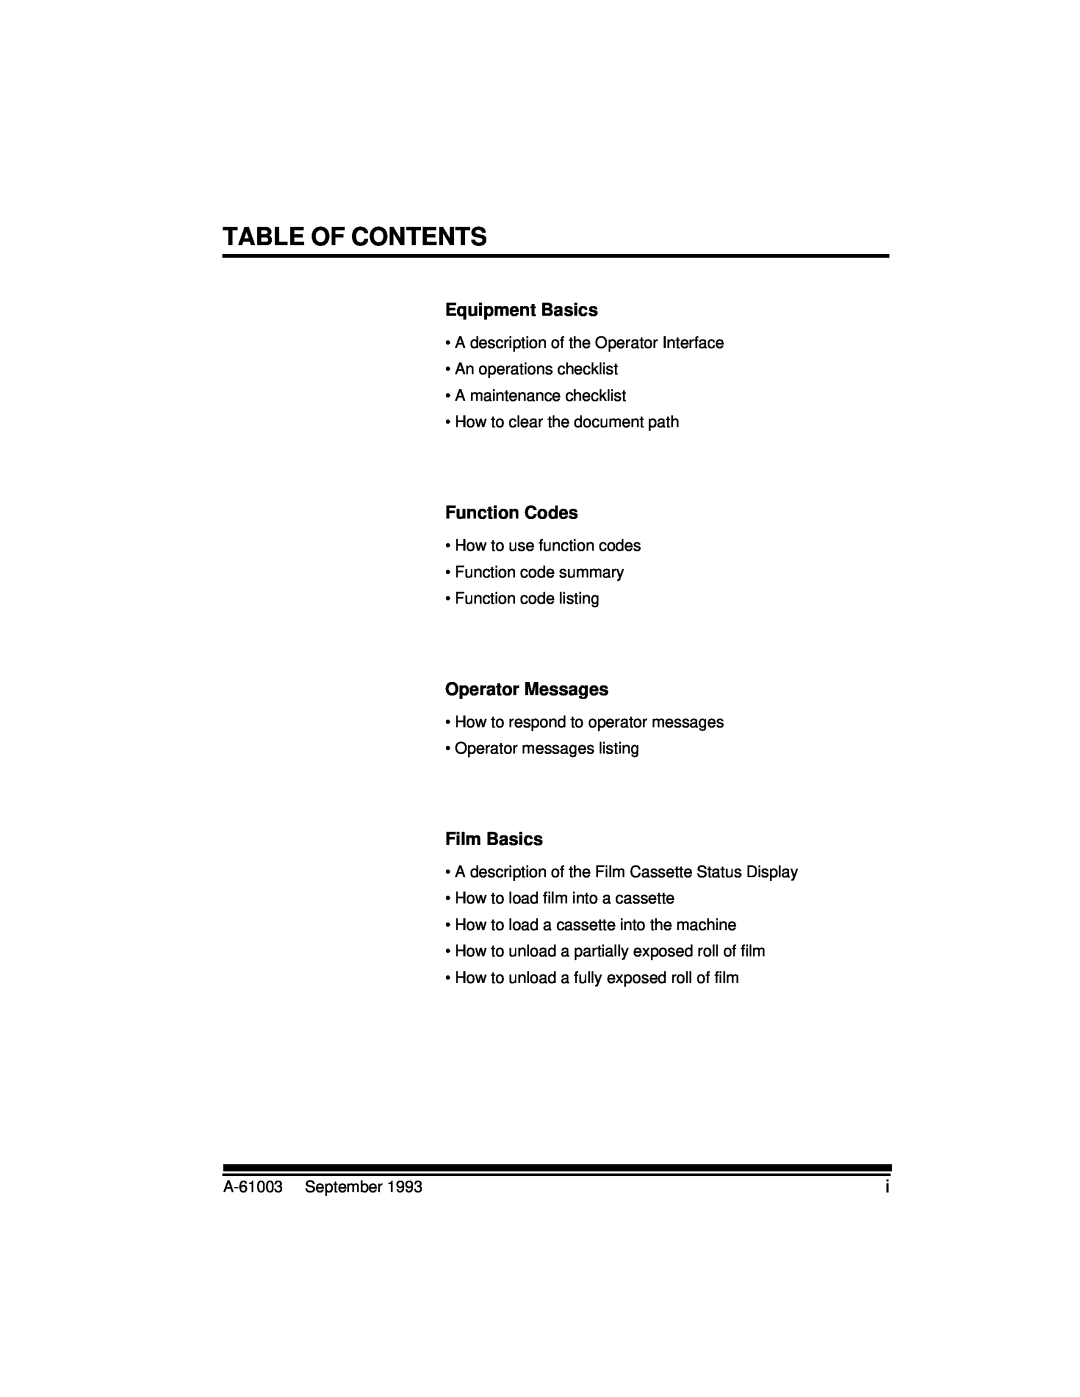 Kodak A-61003 manual Table Of Contents, Equipment Basics, Function Codes, Operator Messages, Film Basics 